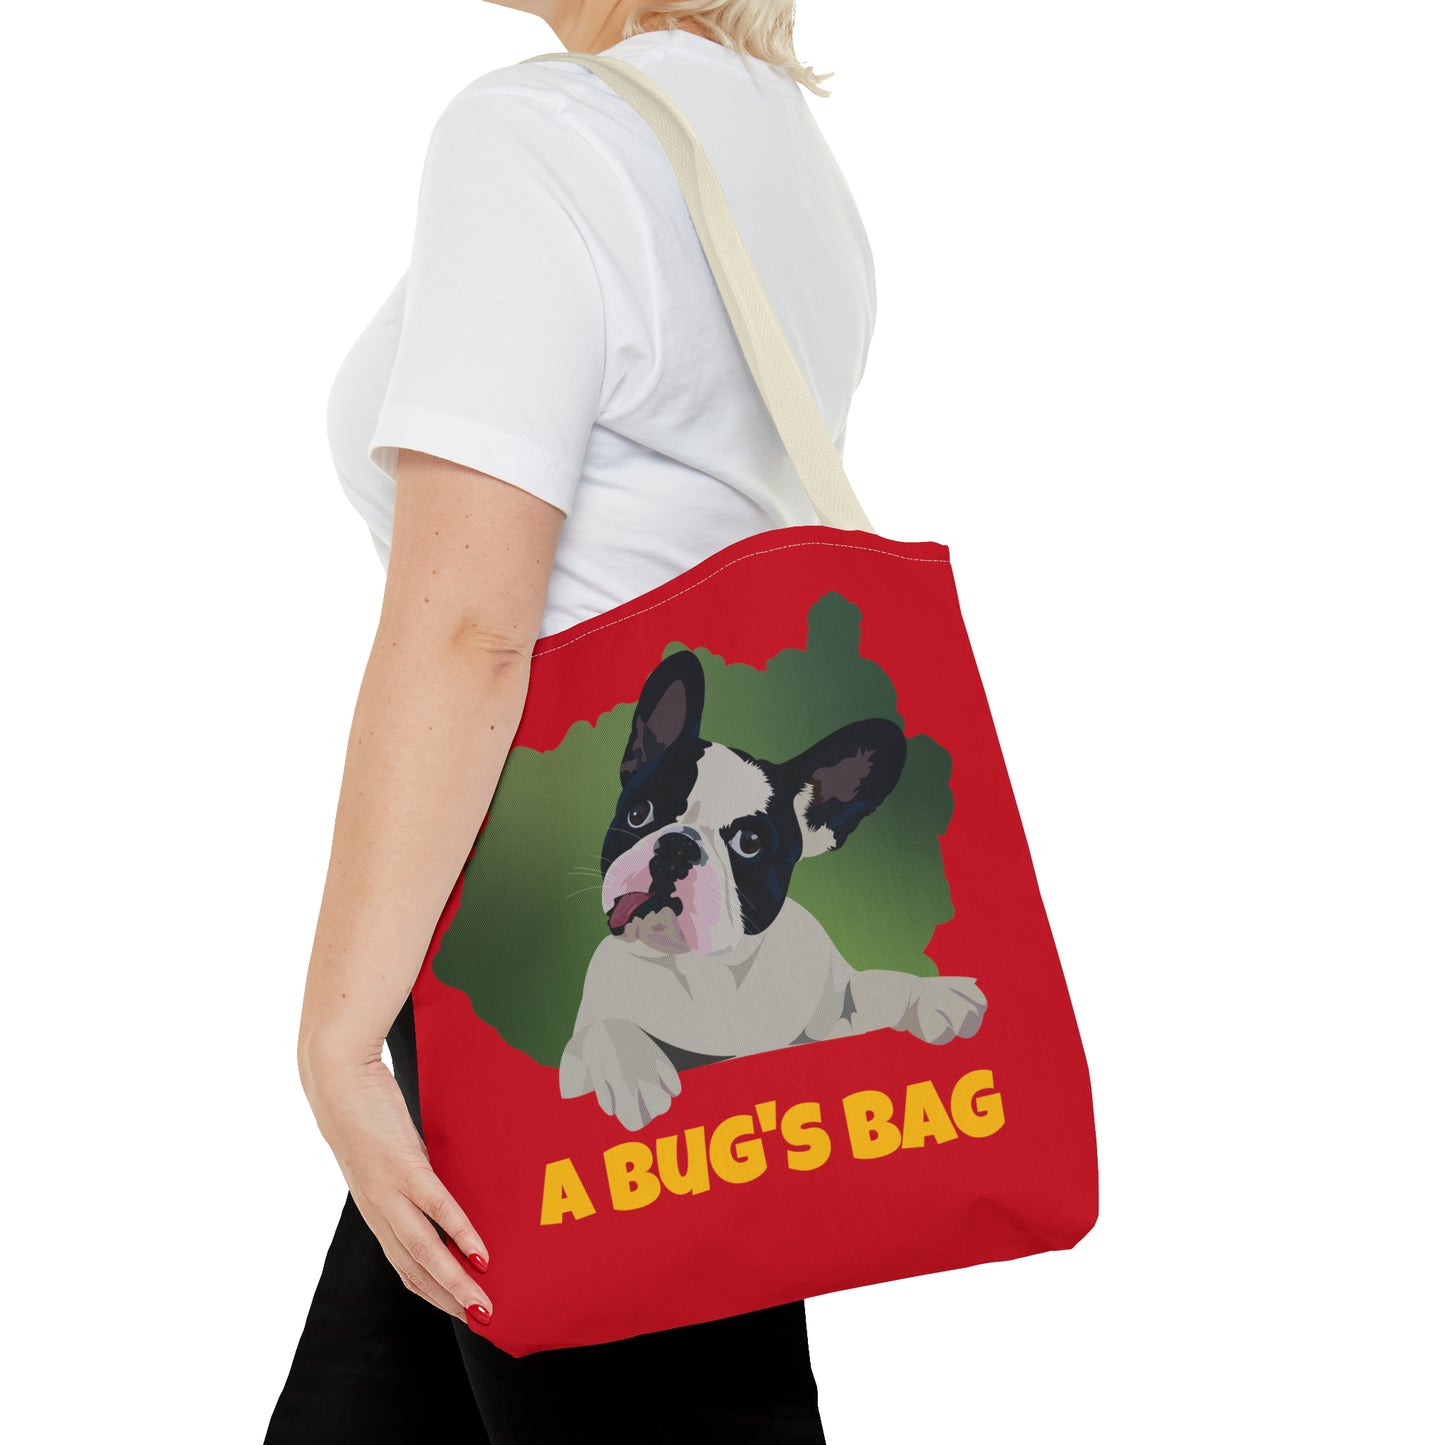 A Bug's Bag